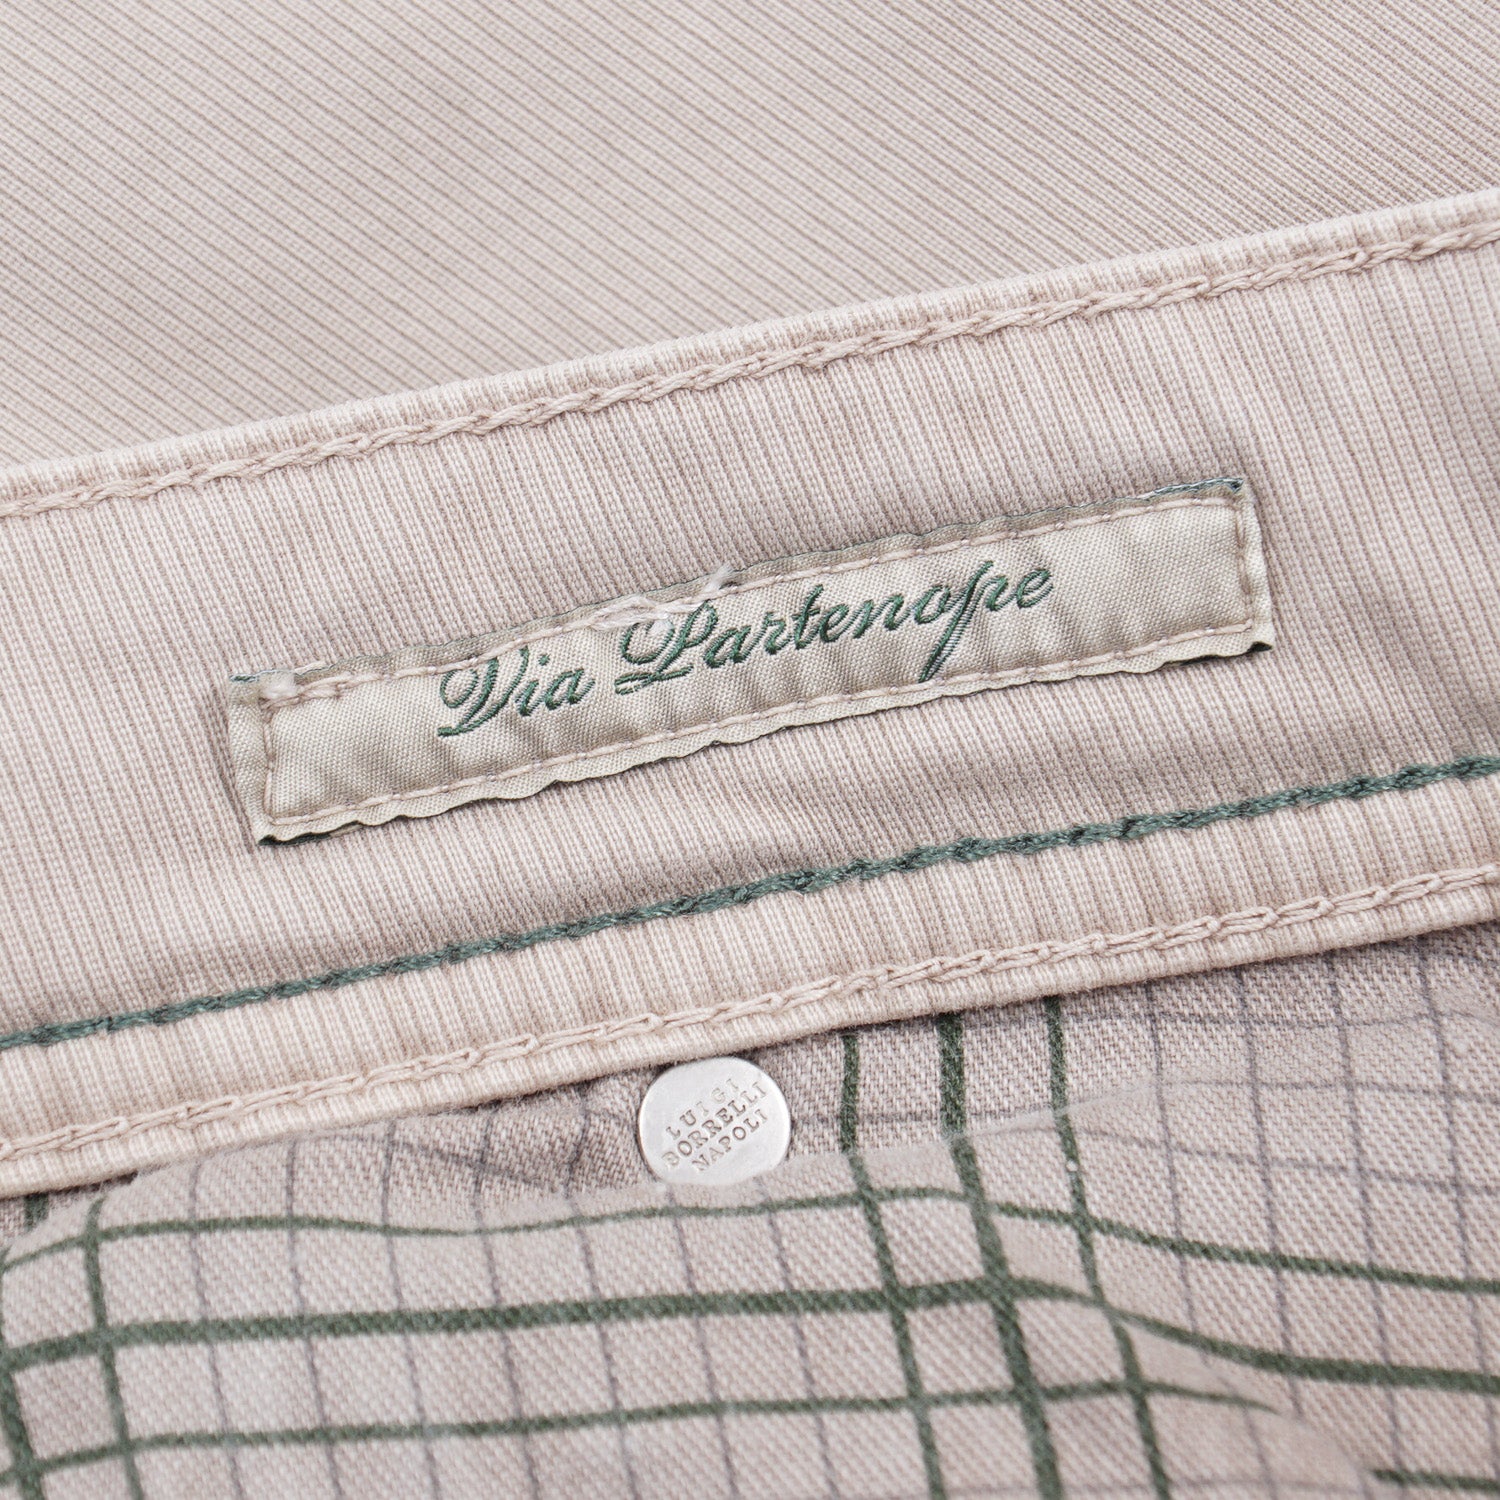 Luigi Borrelli 5-Pocket Cotton Pants - Top Shelf Apparel